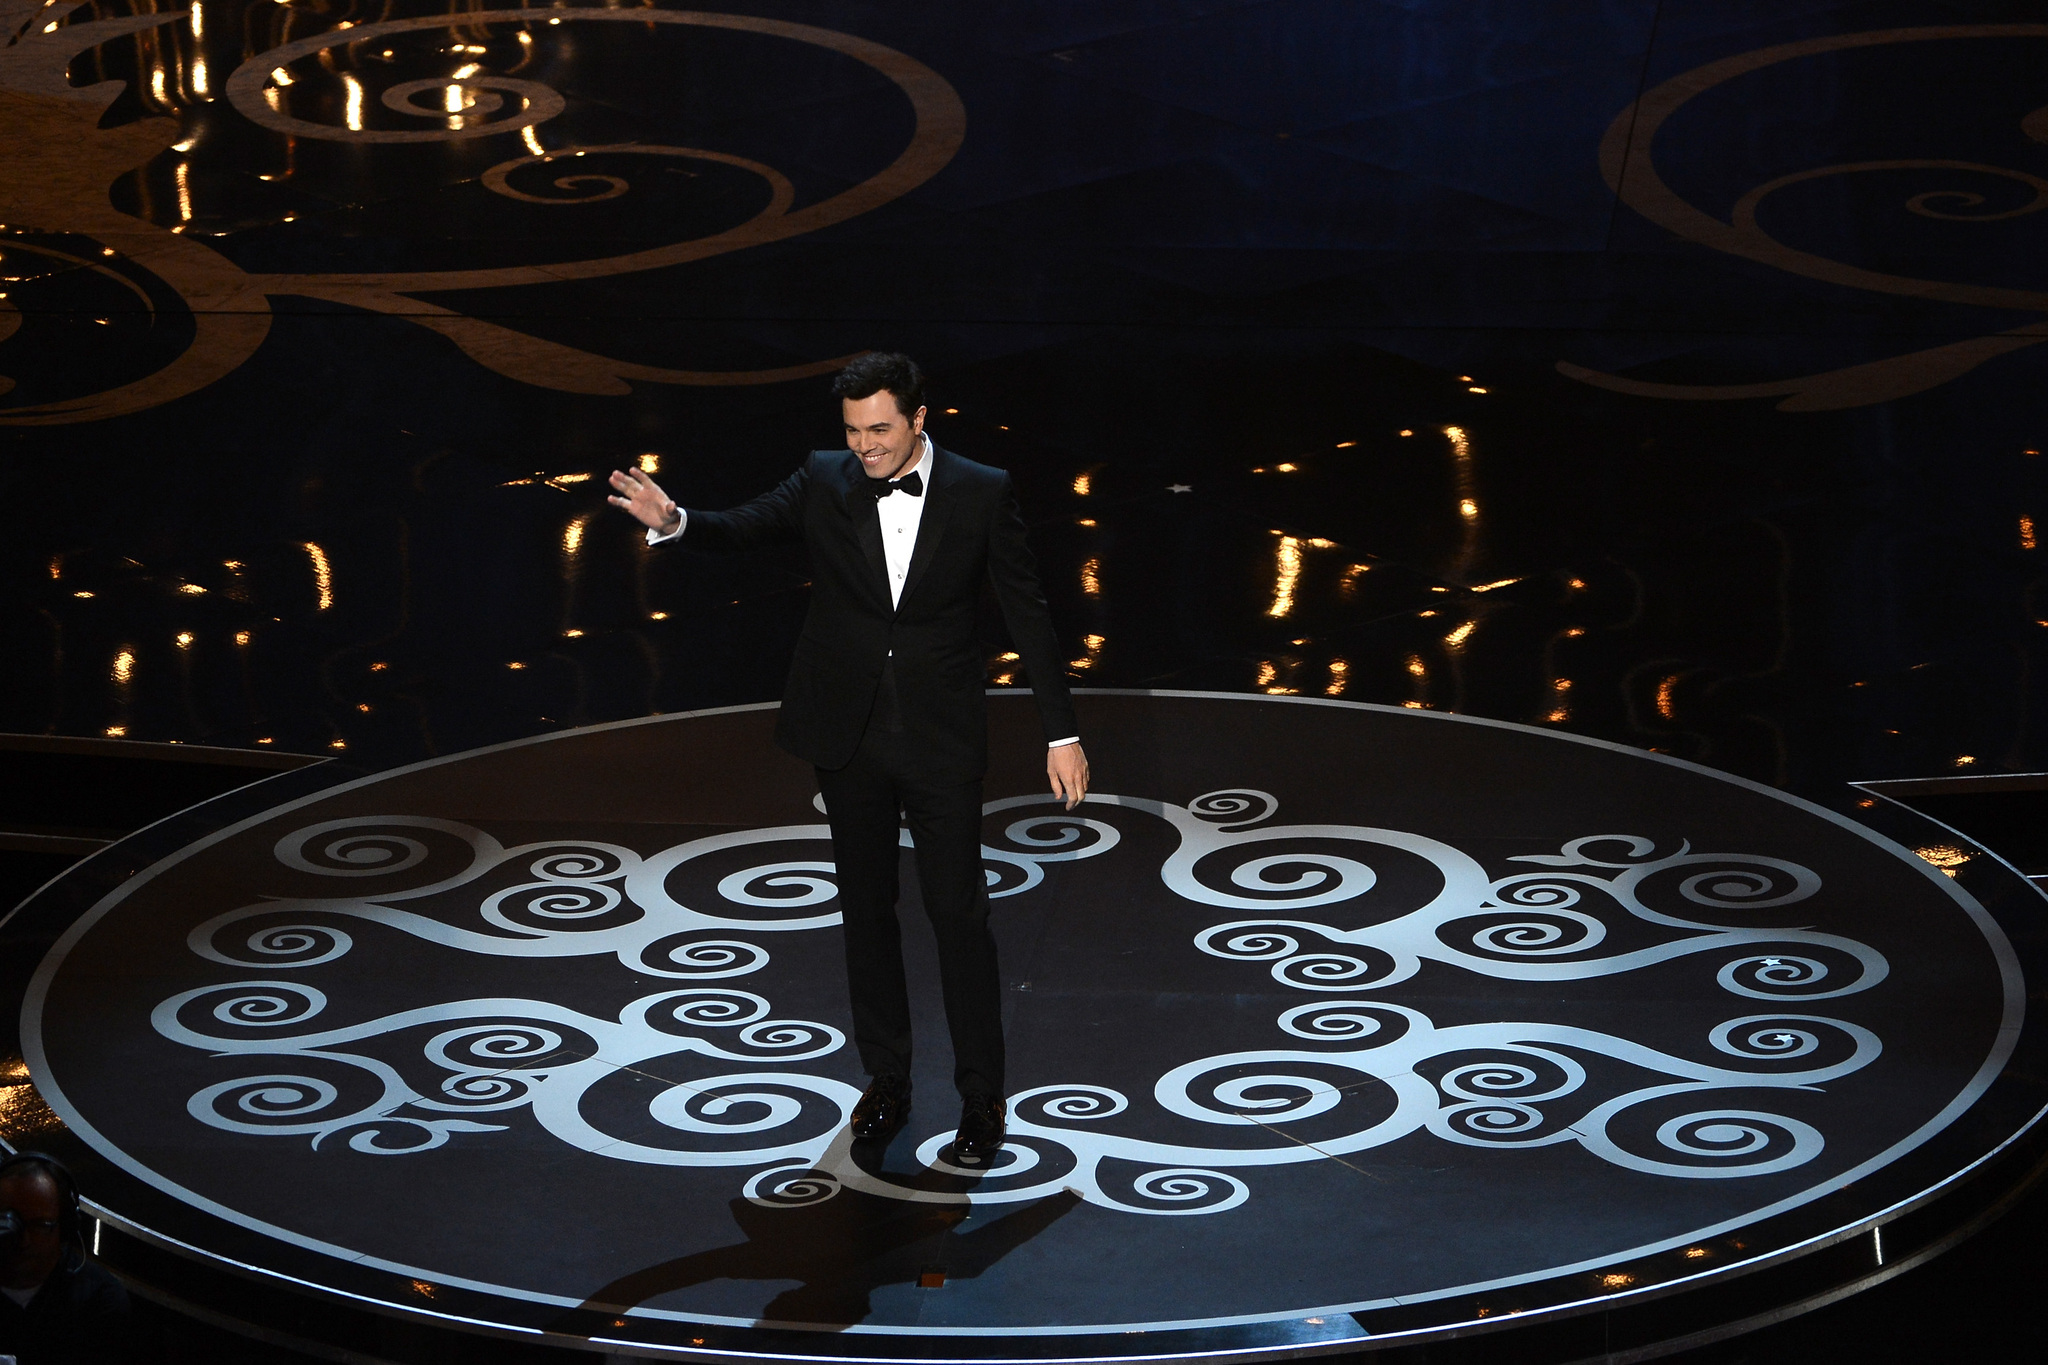 Seth MacFarlane at event of The Oscars (2013)